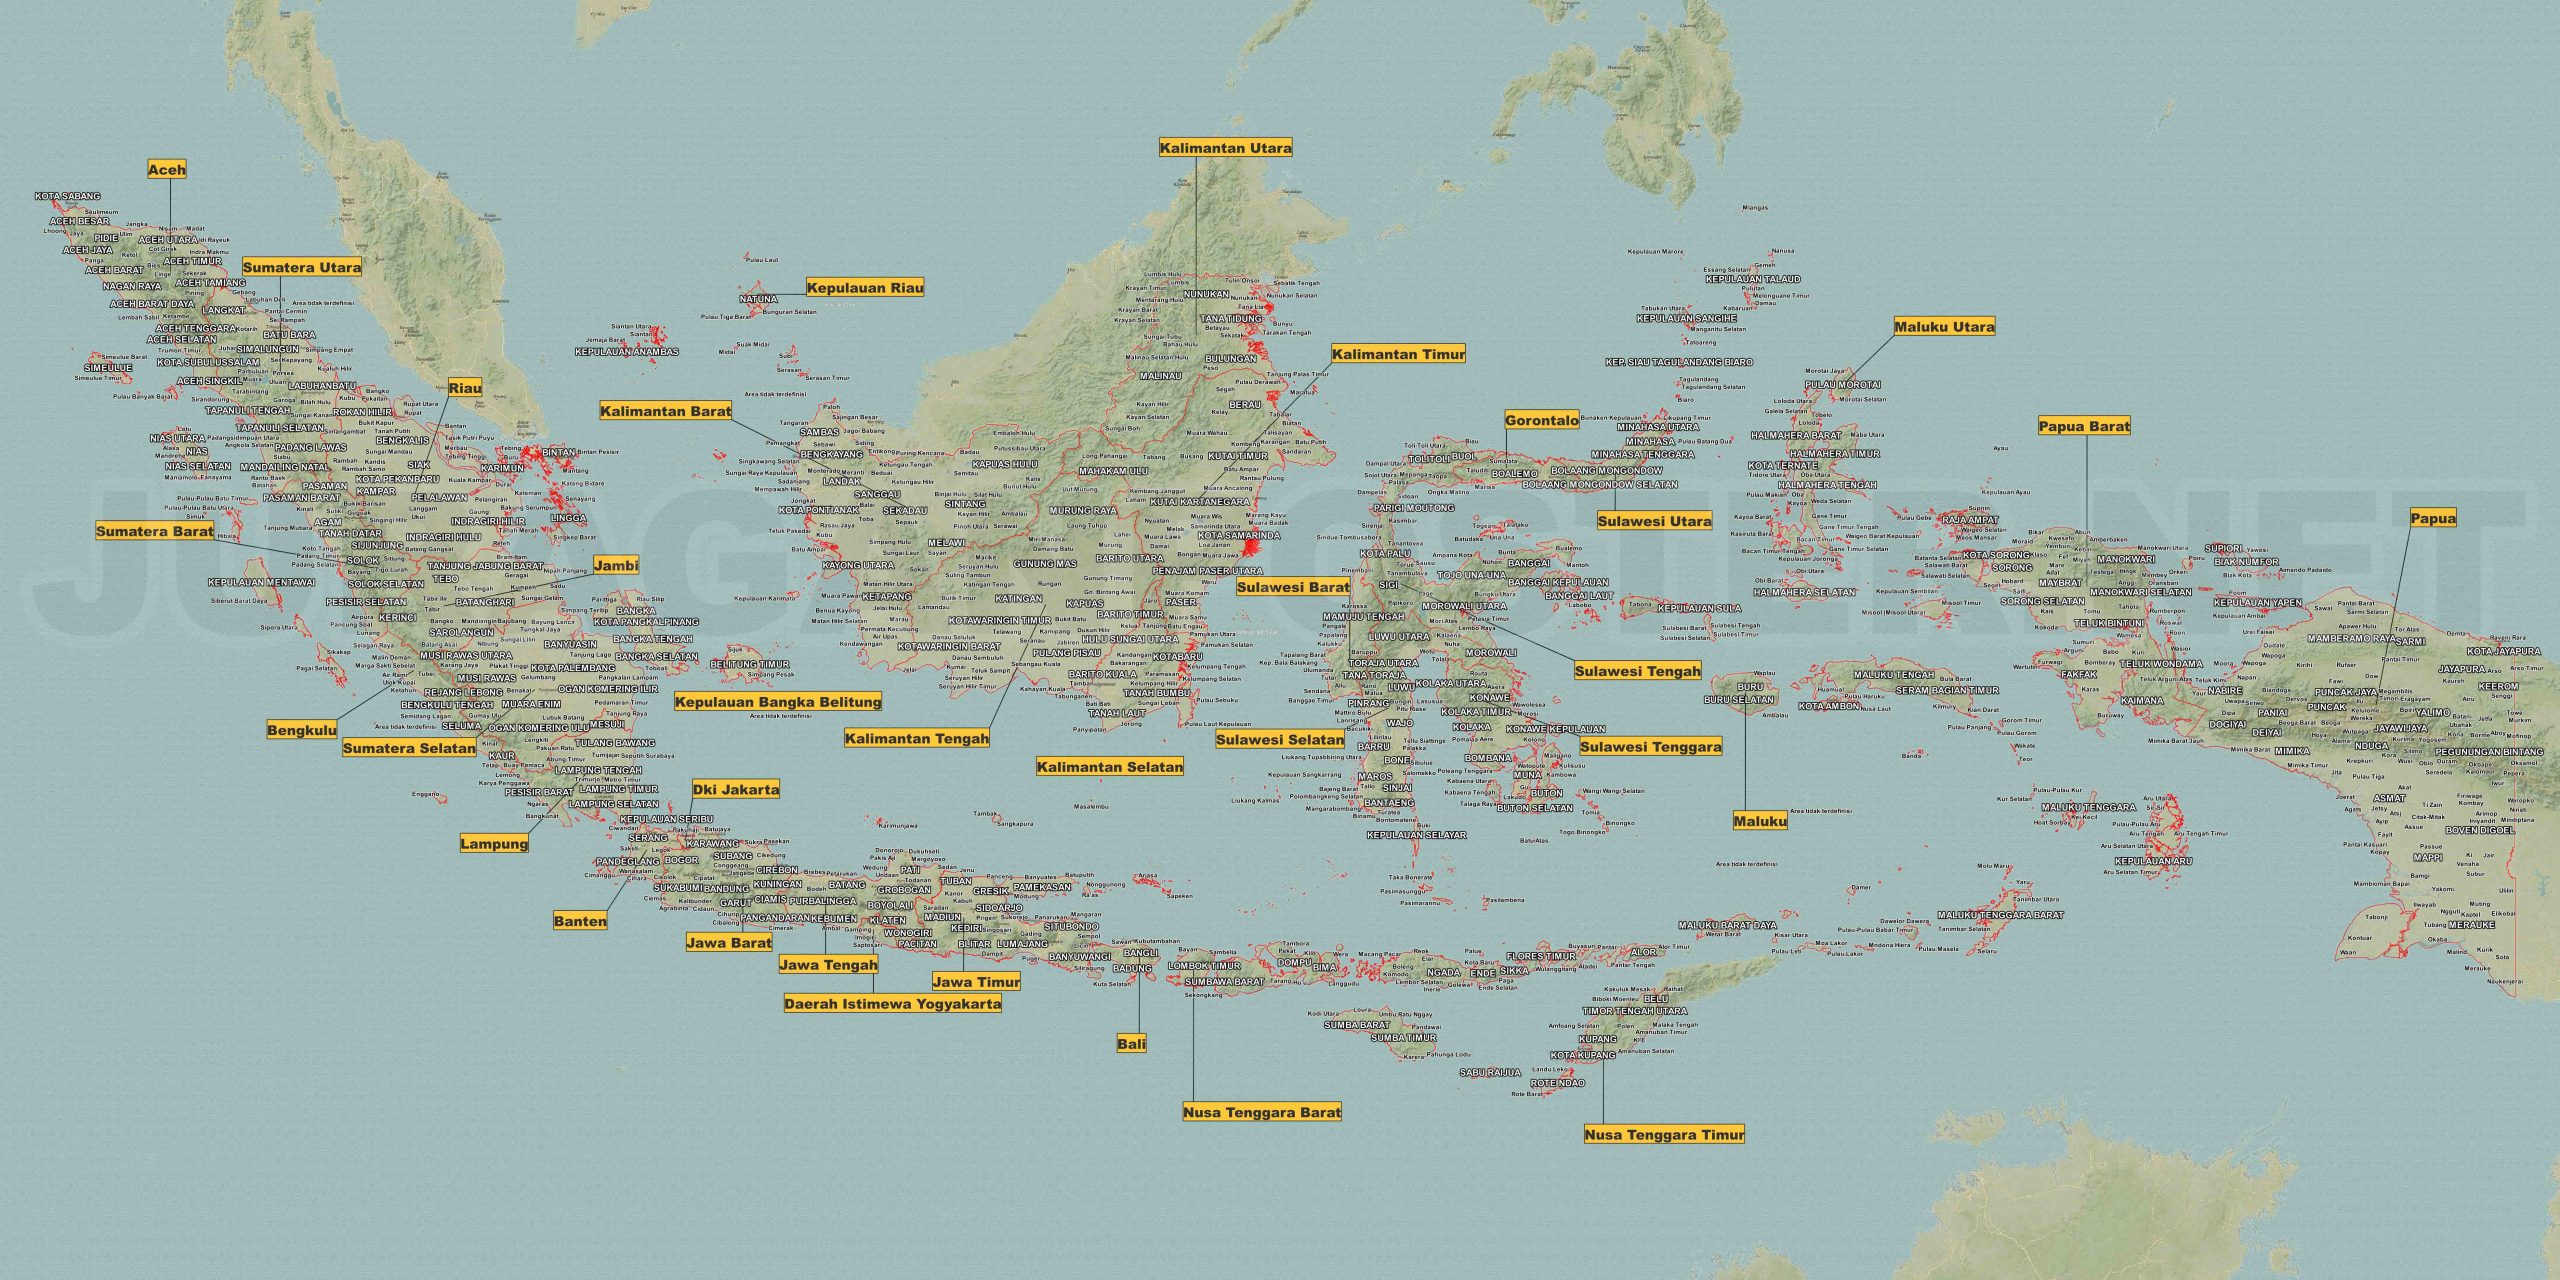 Kartun Peta Indonesia: Menampilkan Nusantara dengan Gaya Kreatif